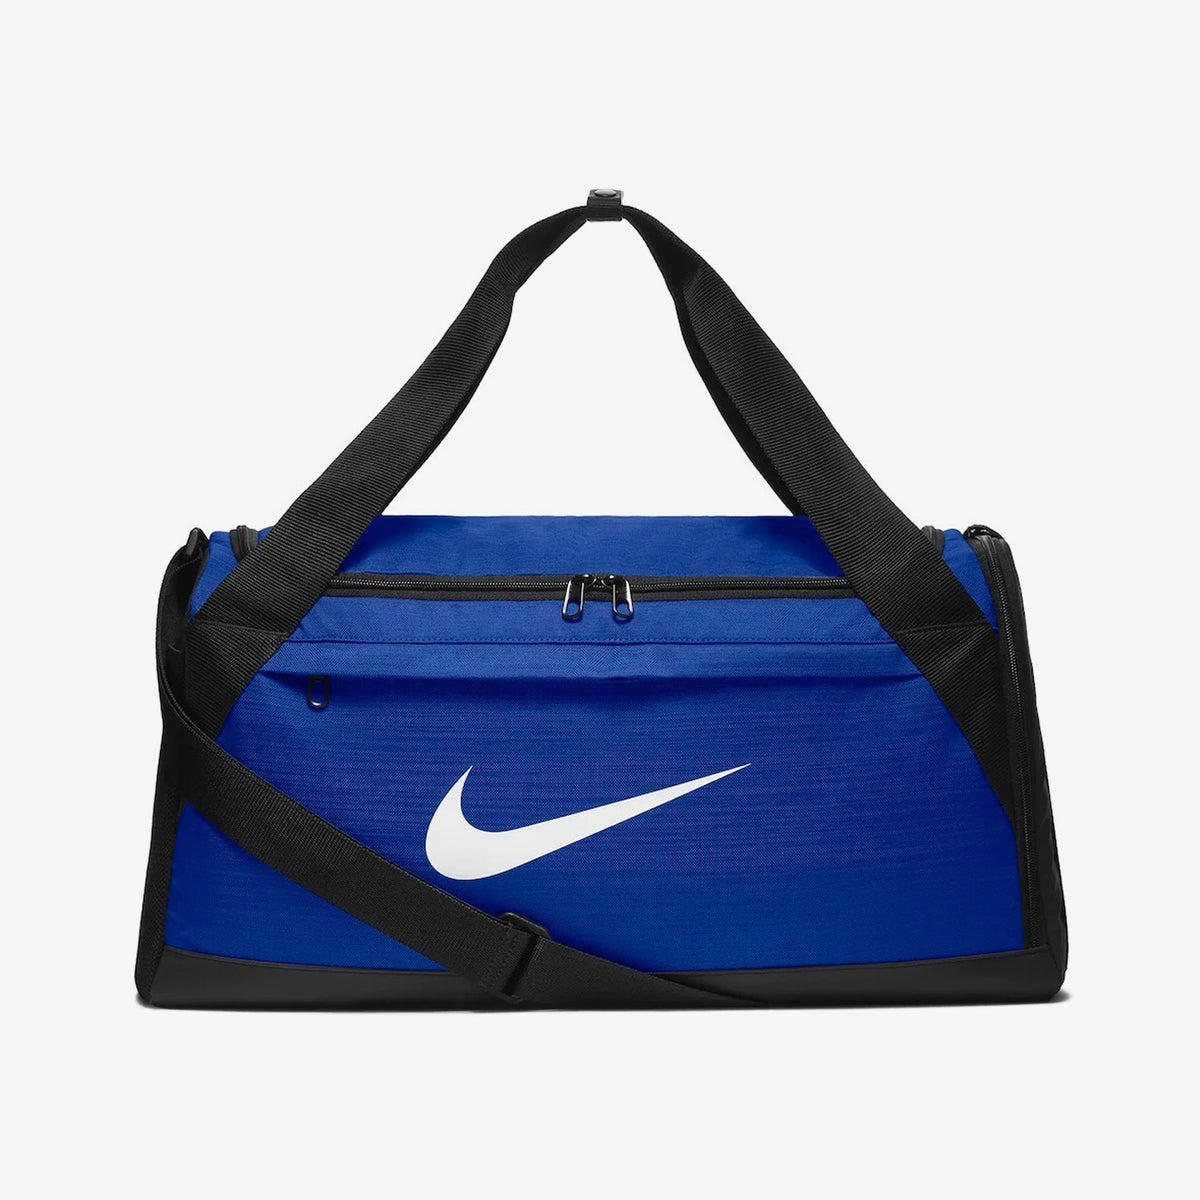 Brasilia Small Duffel Bag - Blue - Niky's Sports